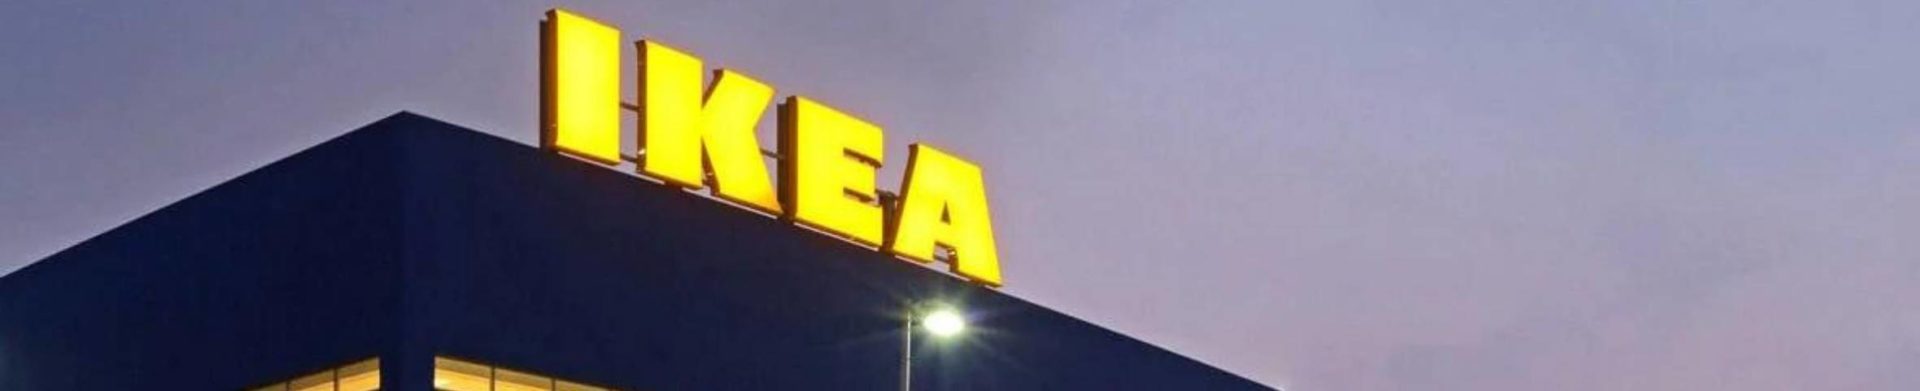 an IKEA building